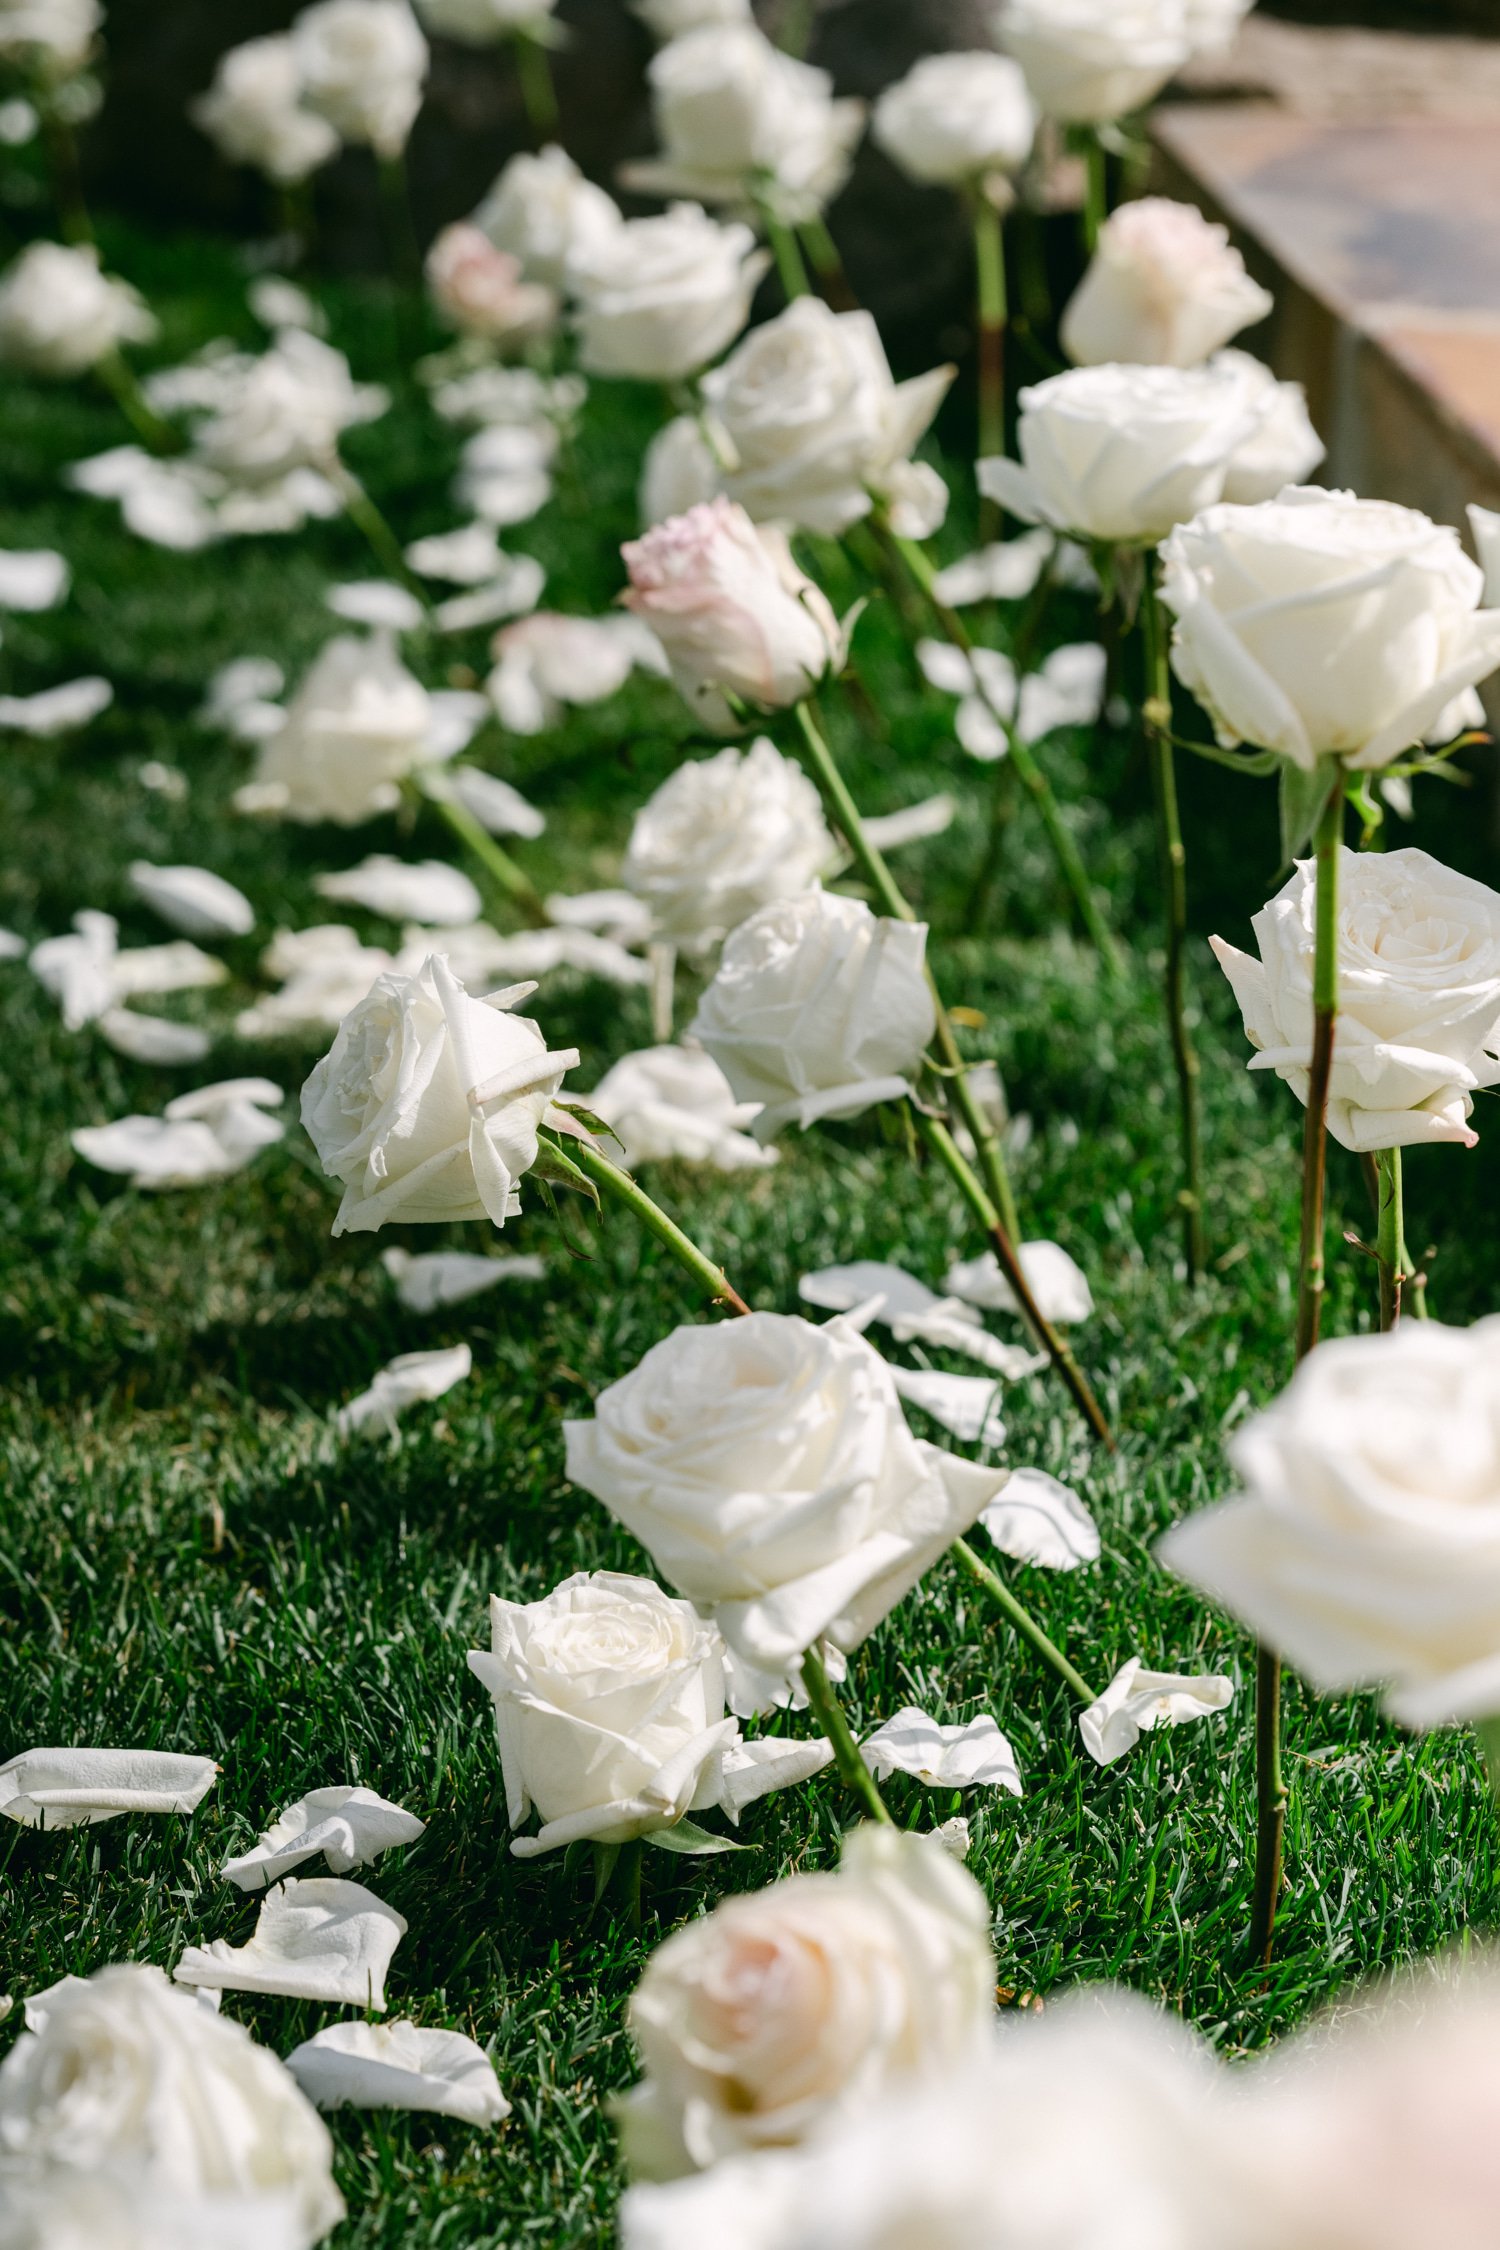 Martis Camp Wedding, photo of white roses flower wedding ceremony decor